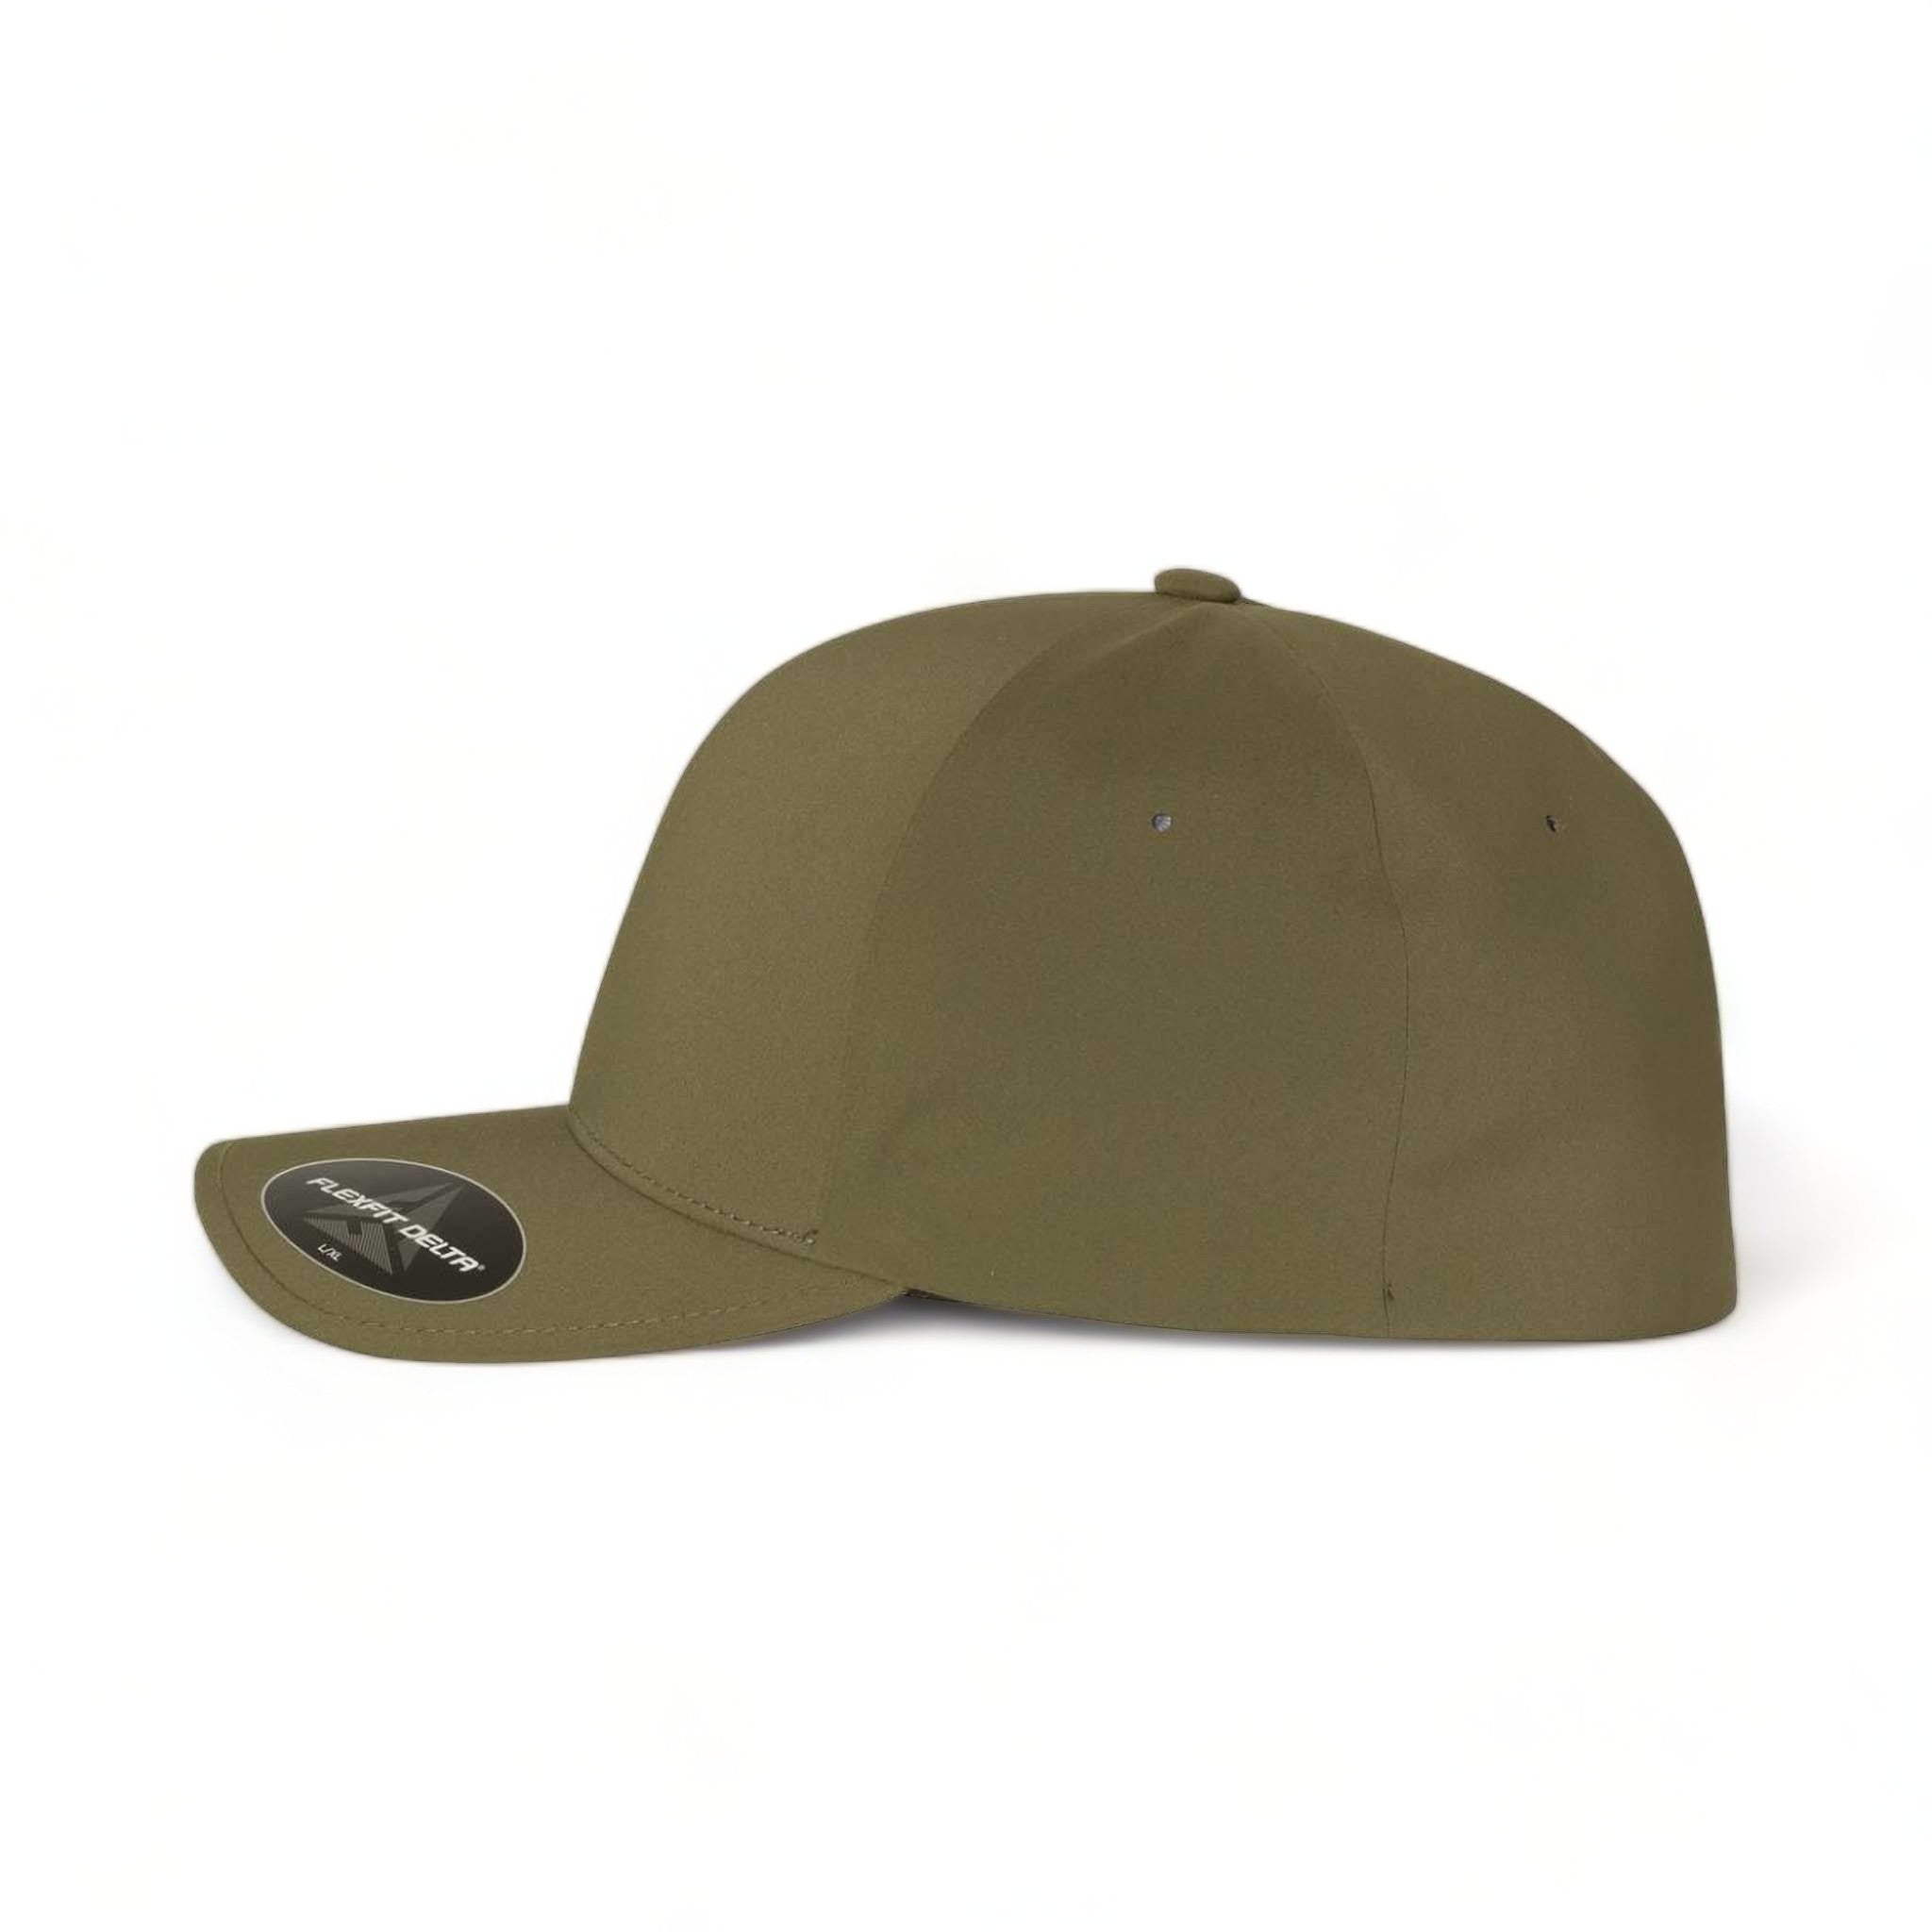 Side view of Flexfit 180 custom hat in olive